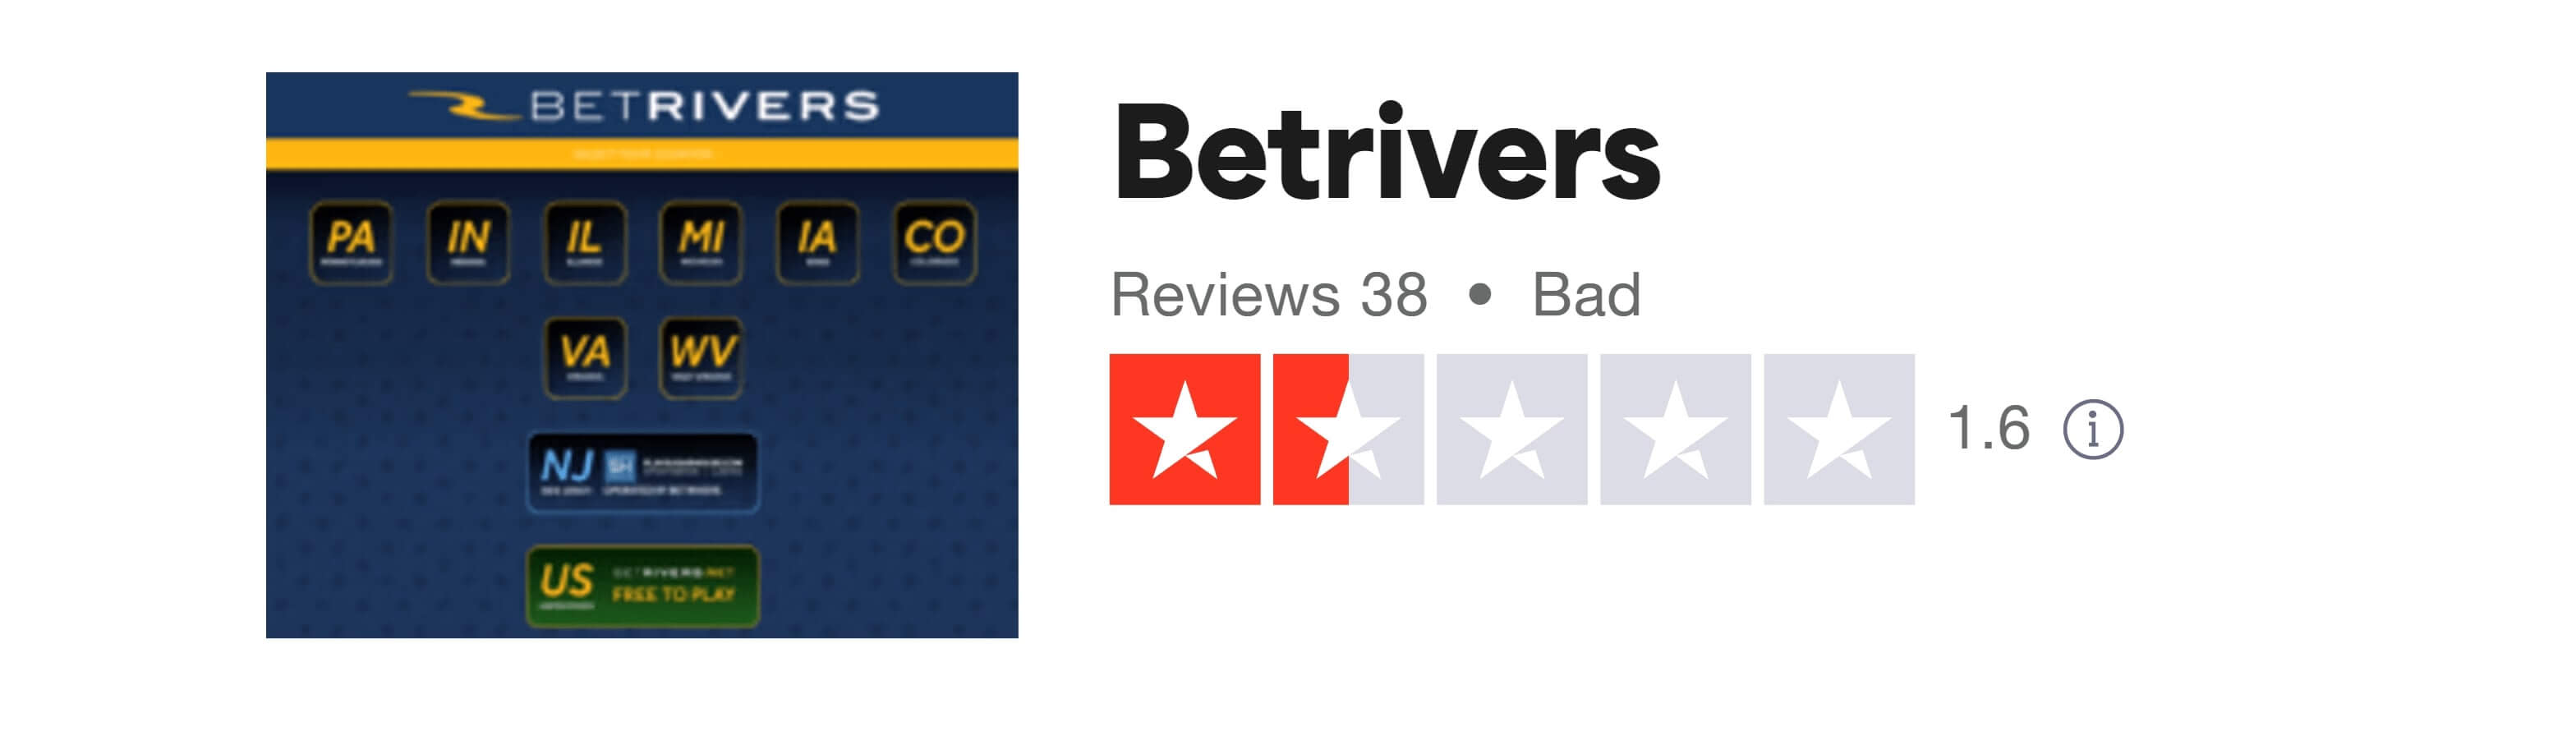 Trustpilot rating screenshot for the BetRivers PA